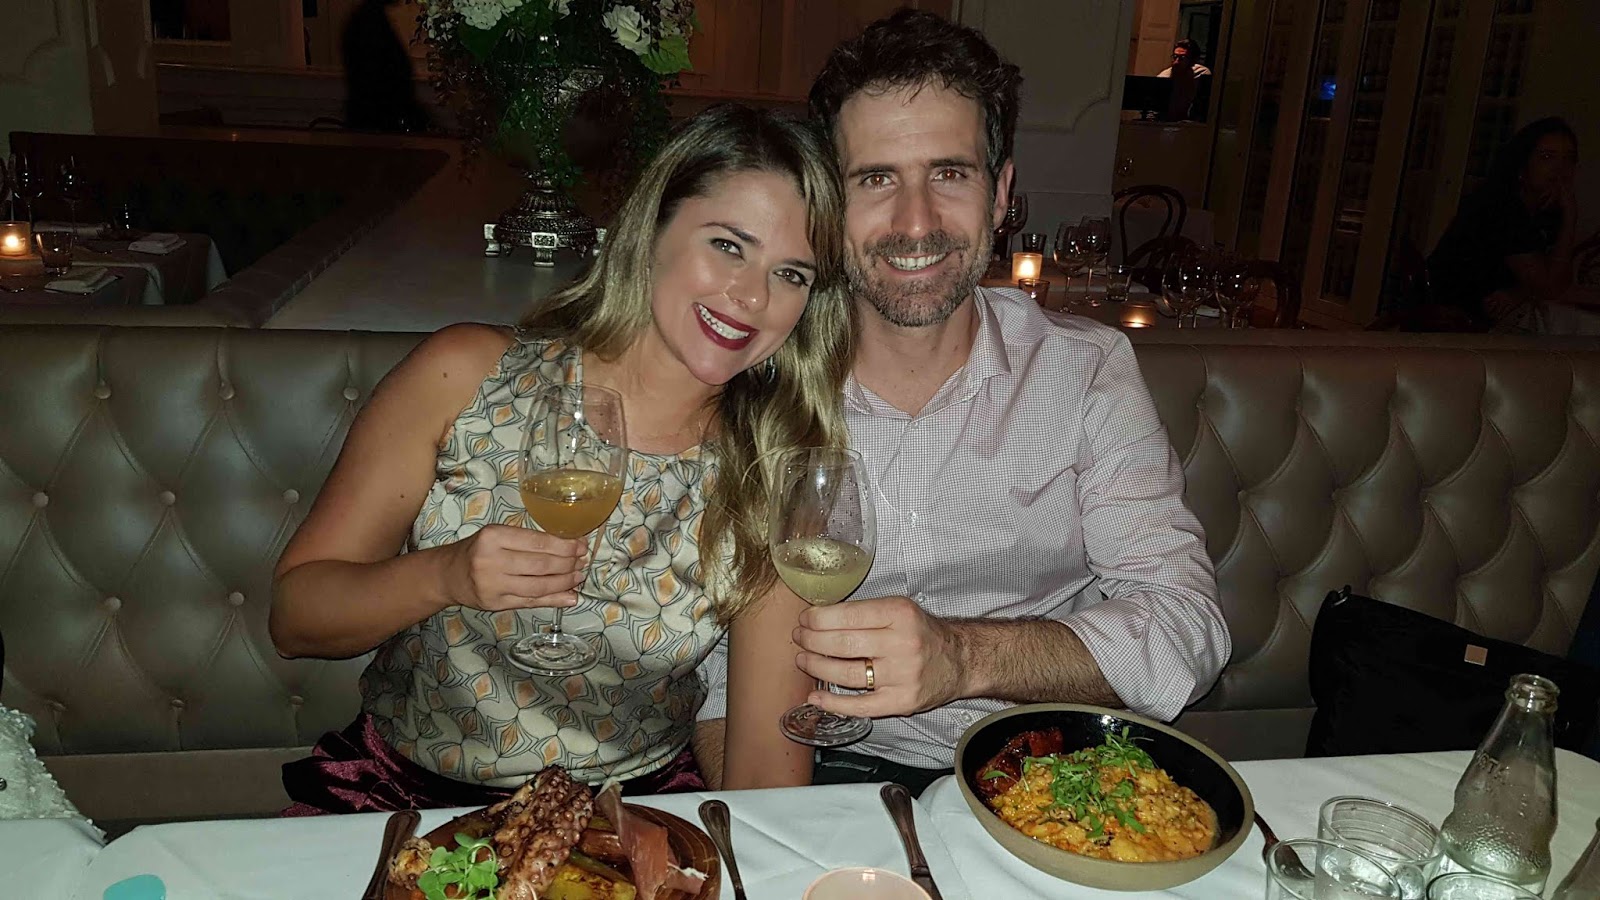 Blog Apaixonados por Viagens - Onde Comer no Rio - Restaurante Bagatelle Rio